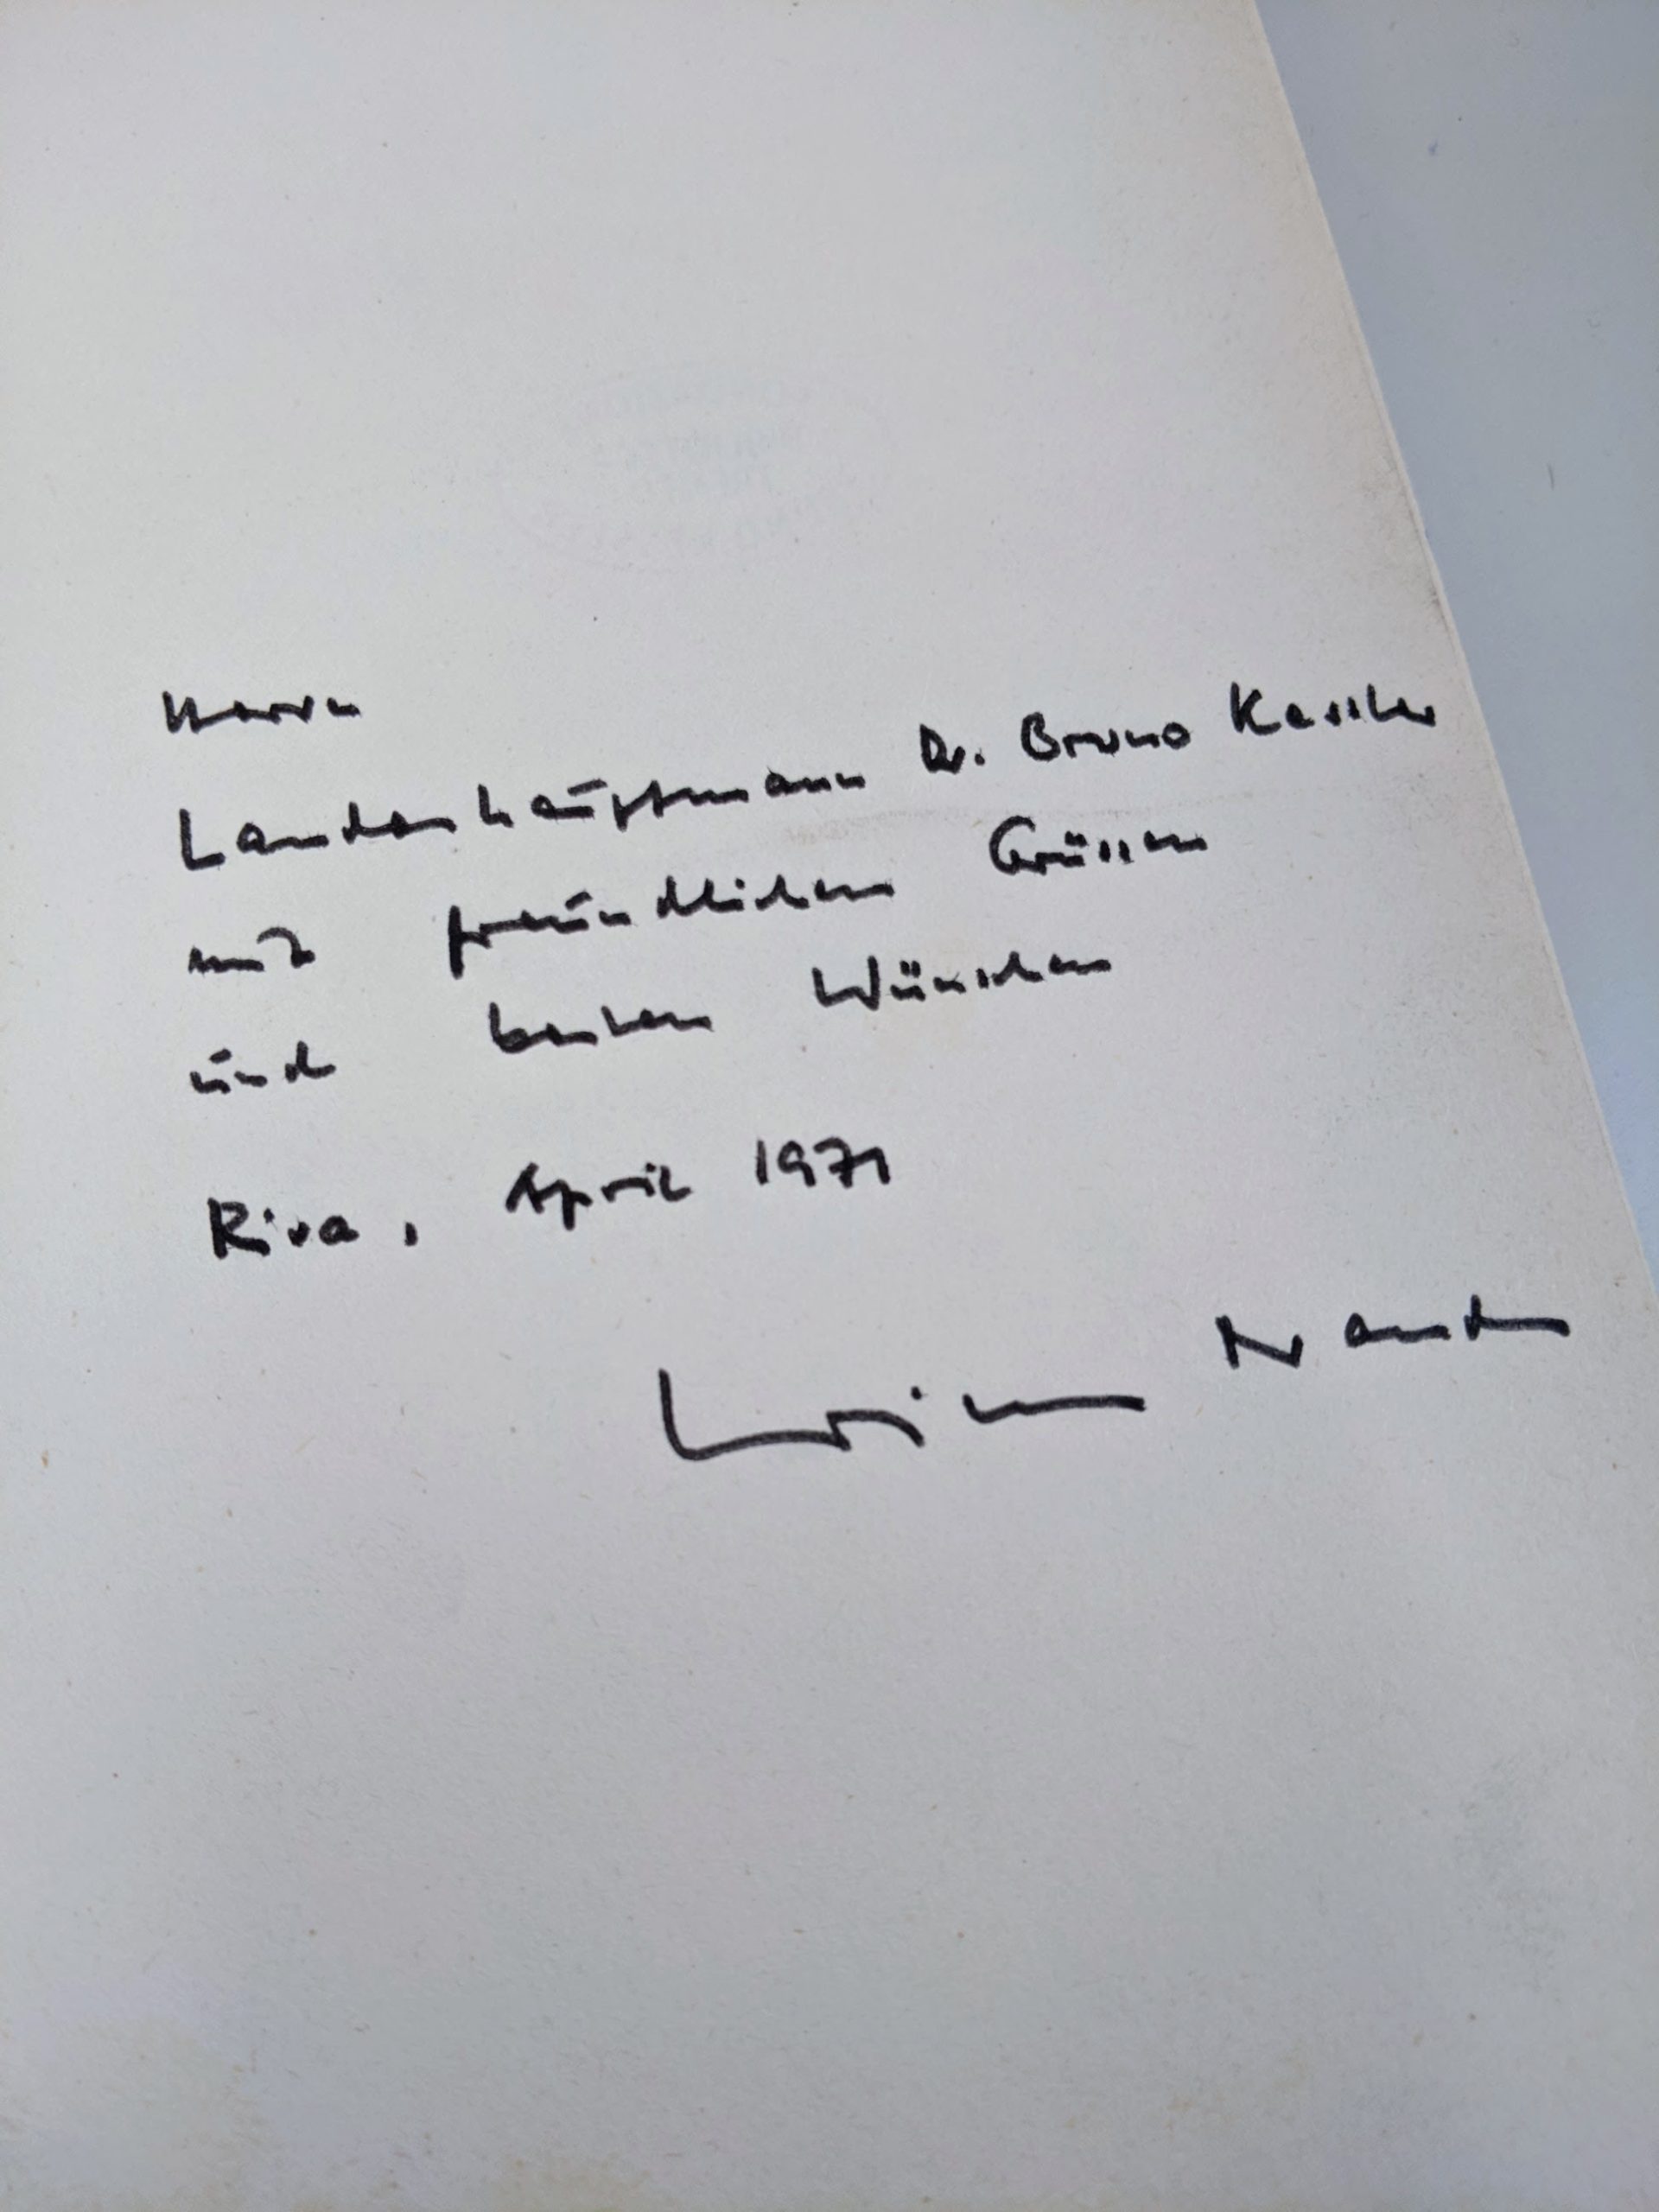 Dedica del cancelliere tedesco Brandt a Bruno Kessler- Archivio FBK